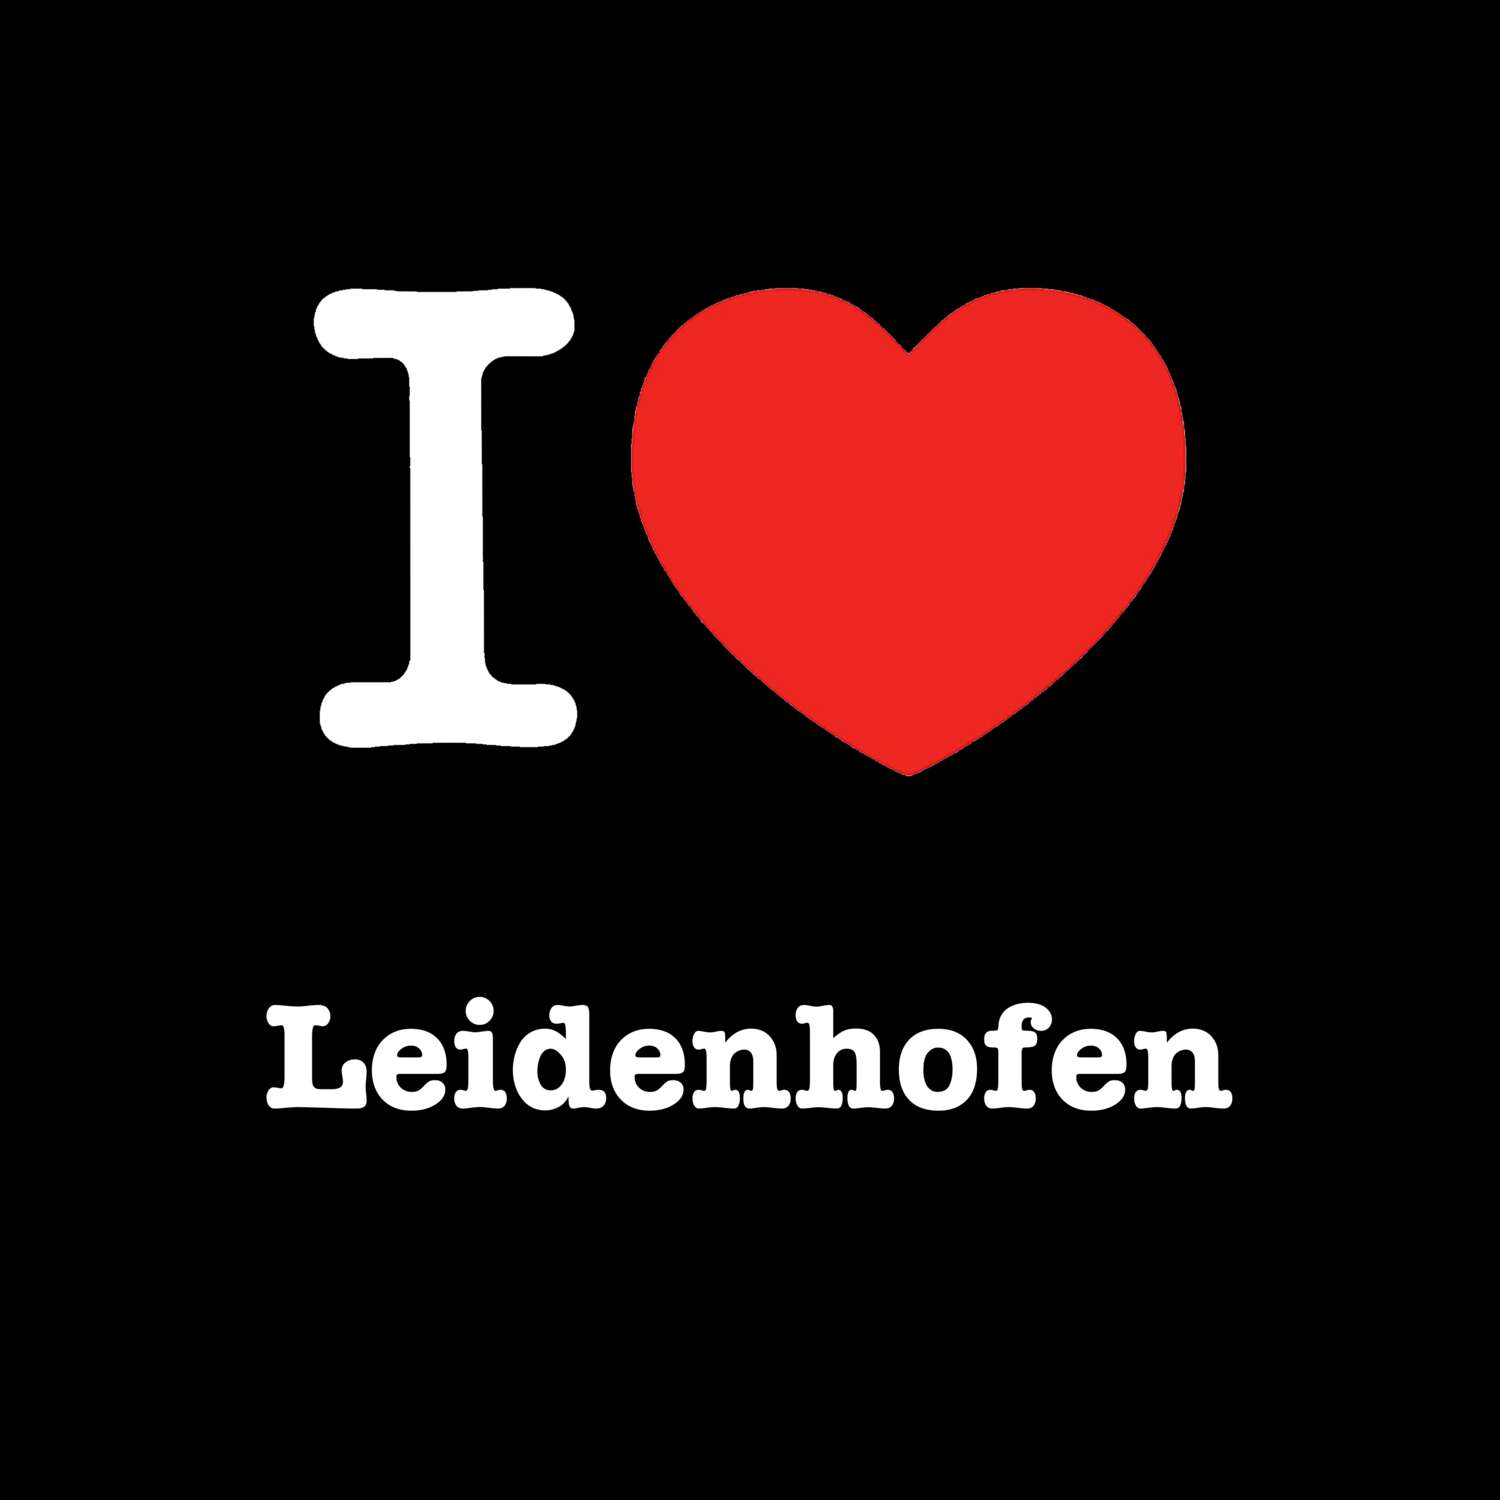 Leidenhofen T-Shirt »I love«